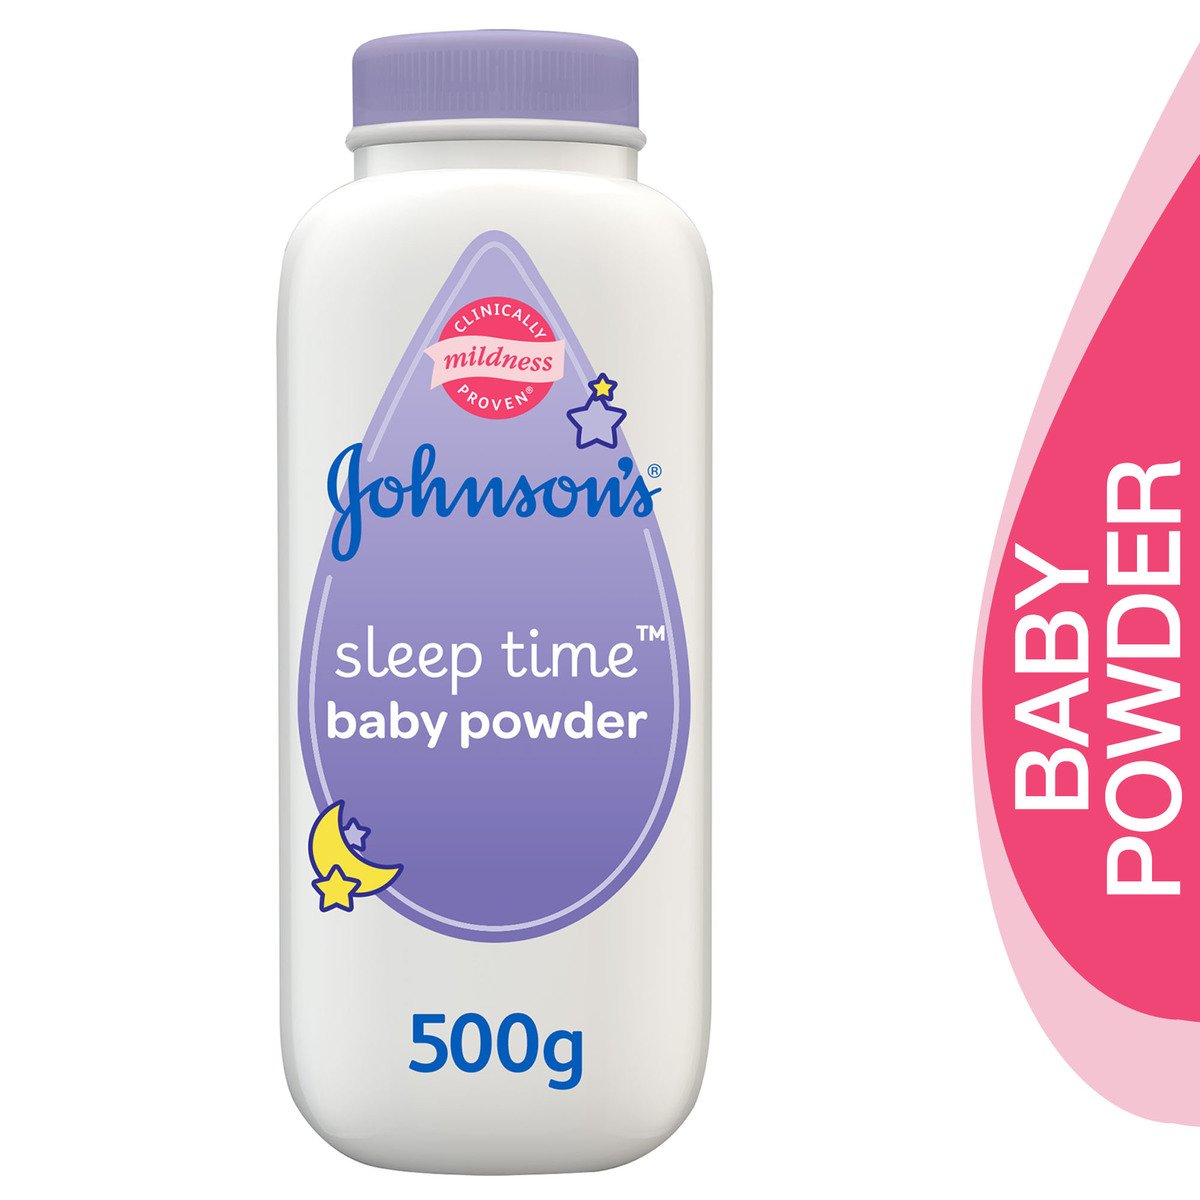 Johnson's Baby Powder Lavender